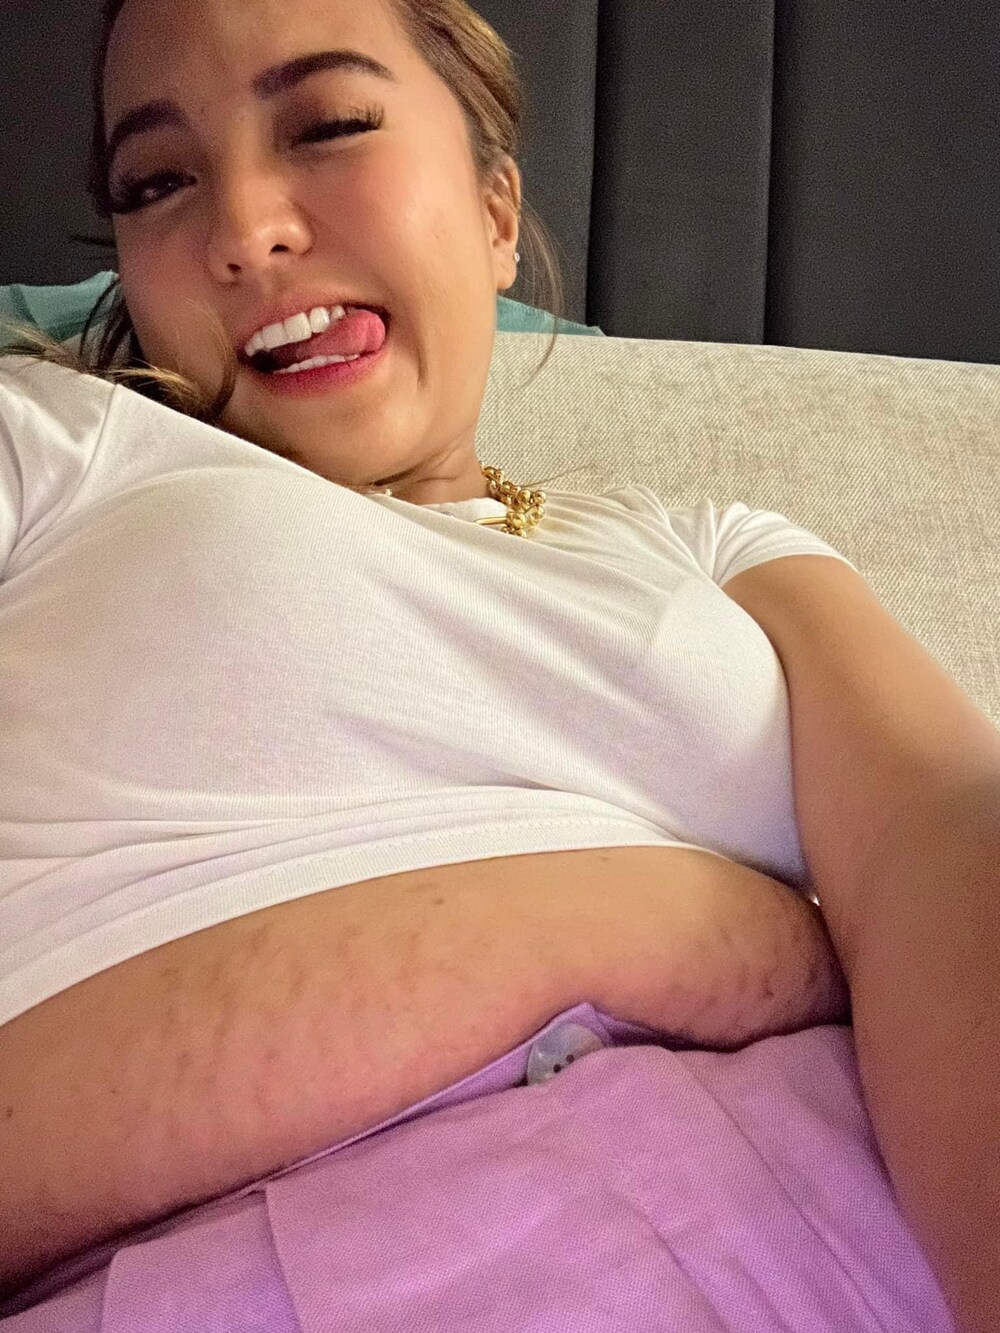 Viy Cortez flaunts postpartum body featuring potbelly full of stretch marks